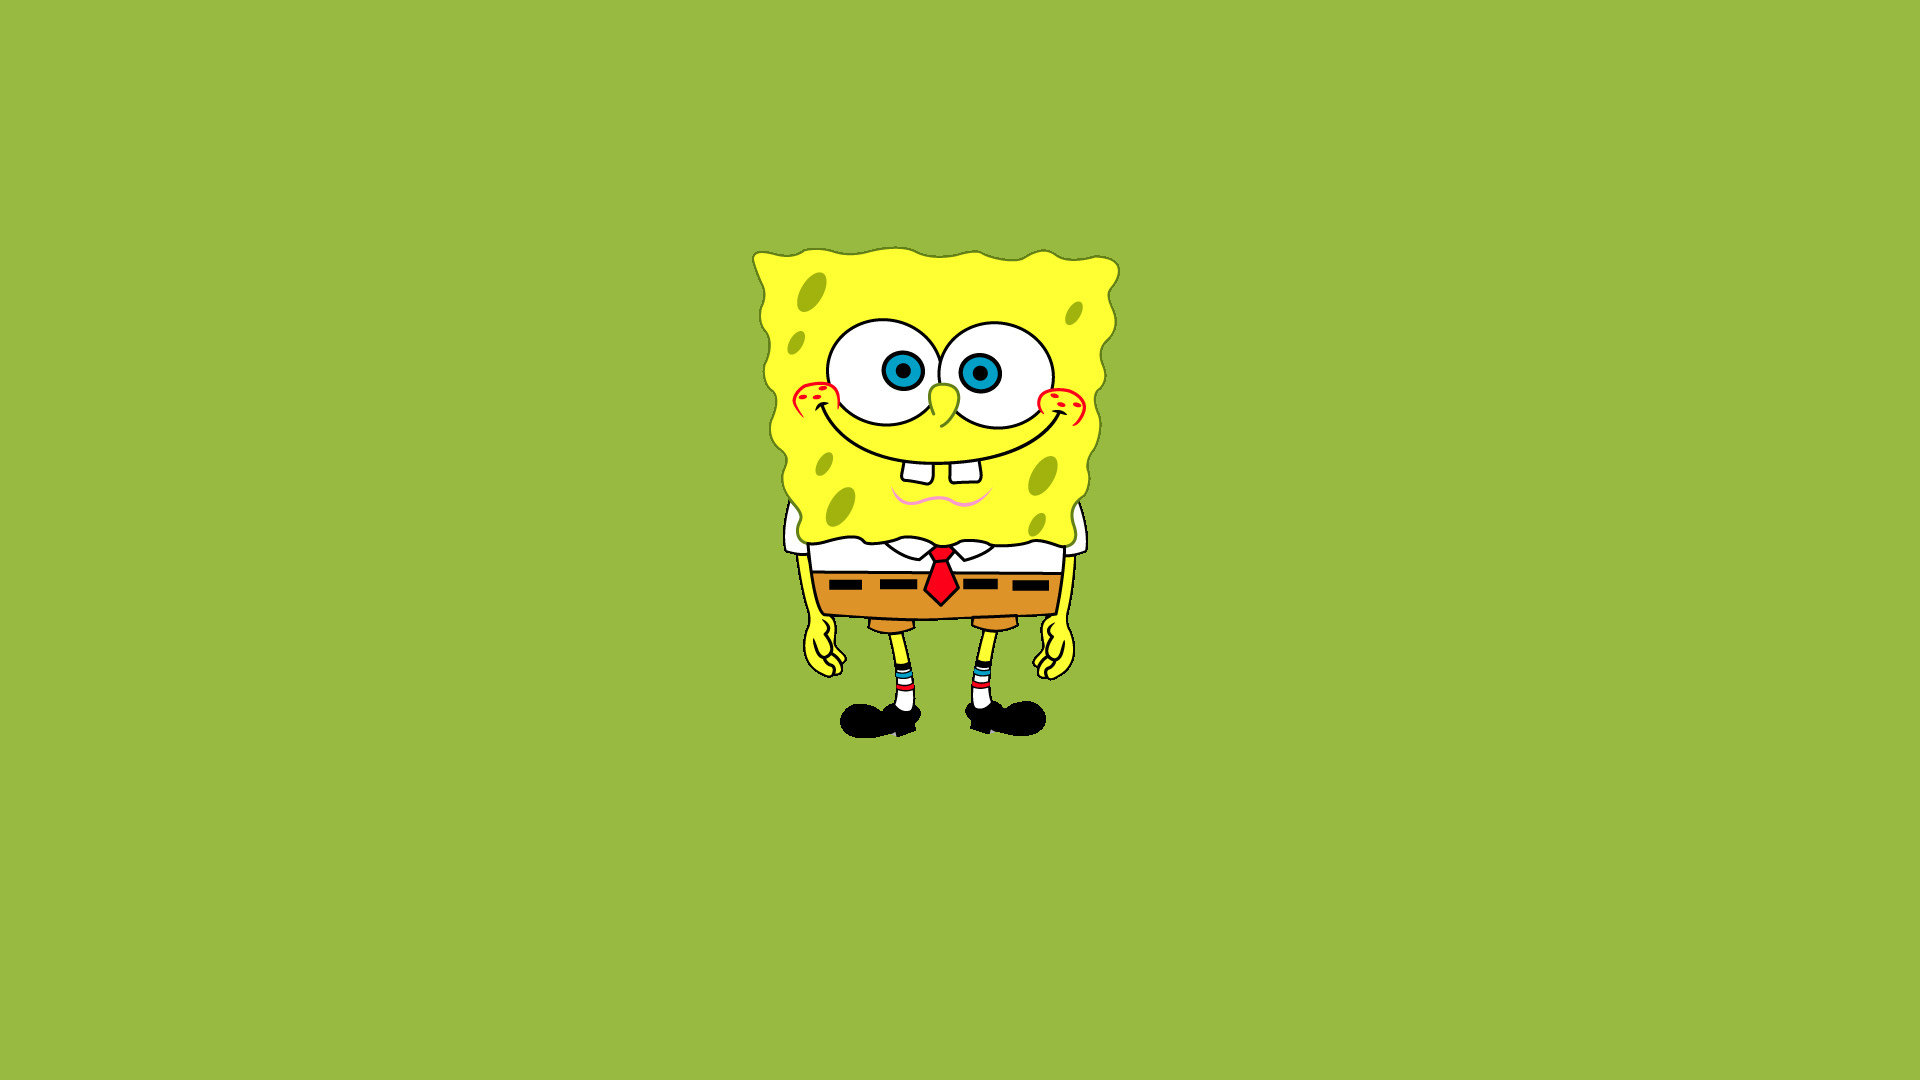 Download full hd 1920x1080 Spongebob Squarepants desktop background ID:135662 for free